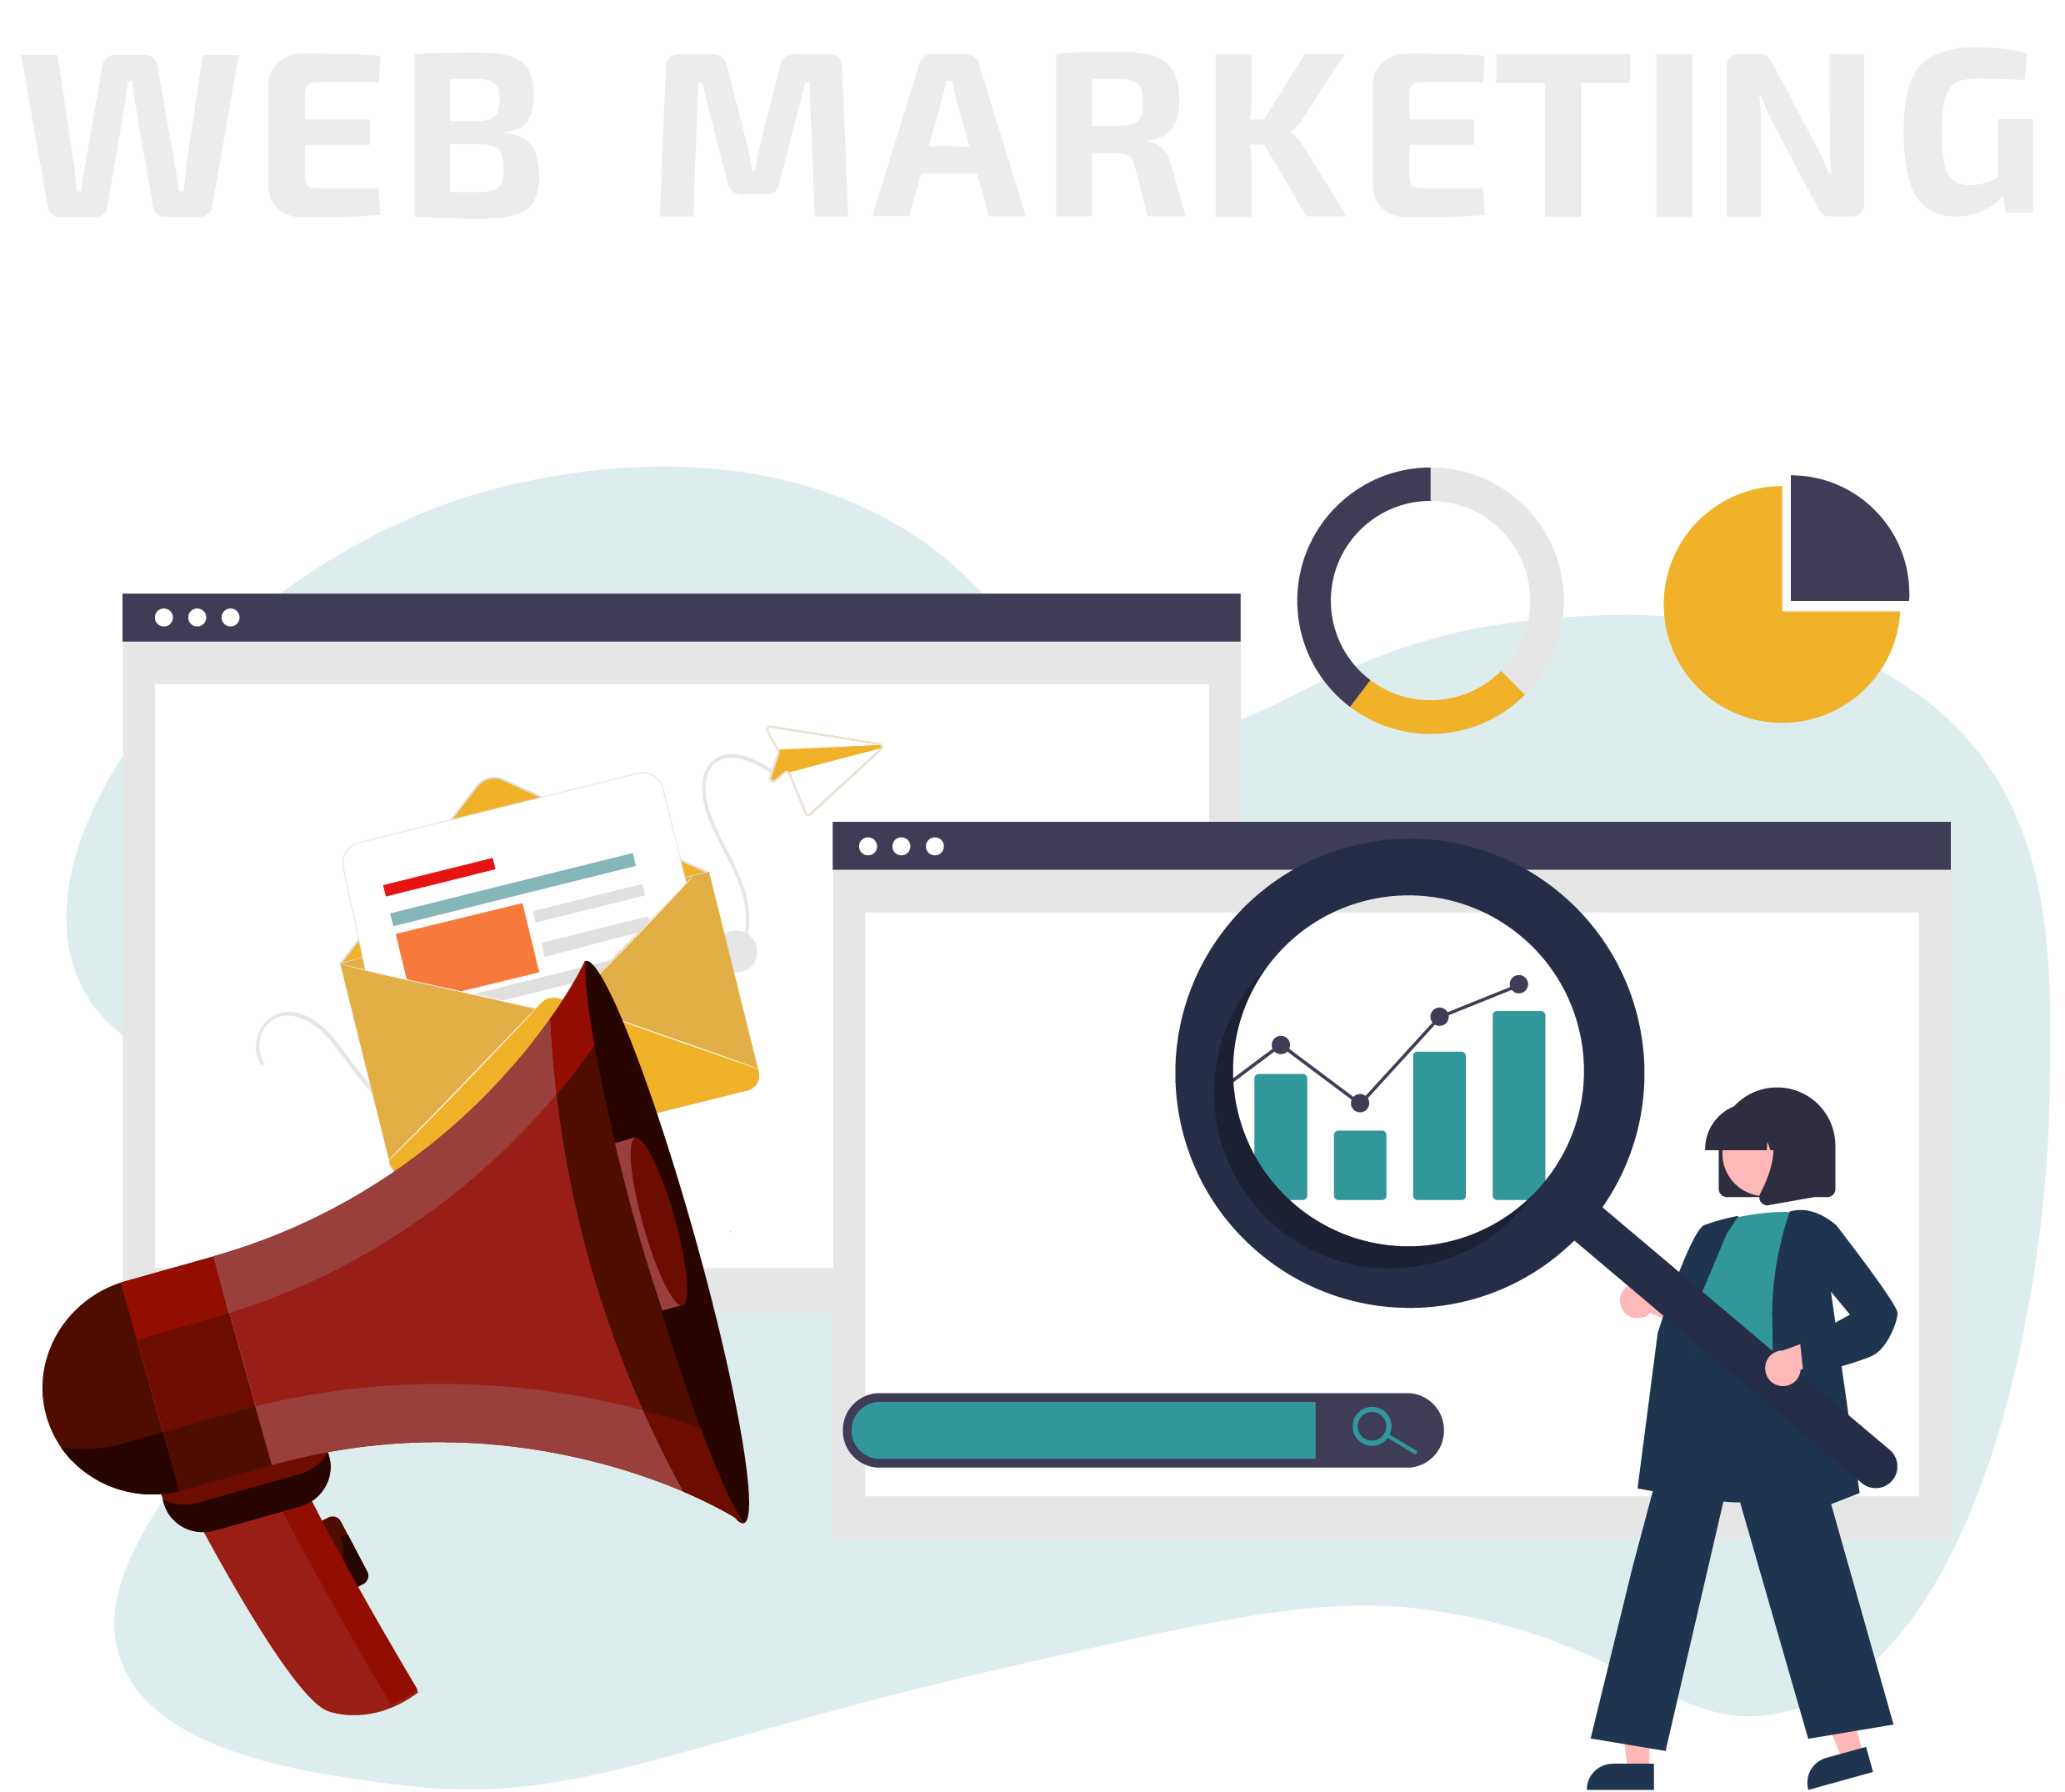 Web marketing | SEO, Advertising, AdWords, Email marketing